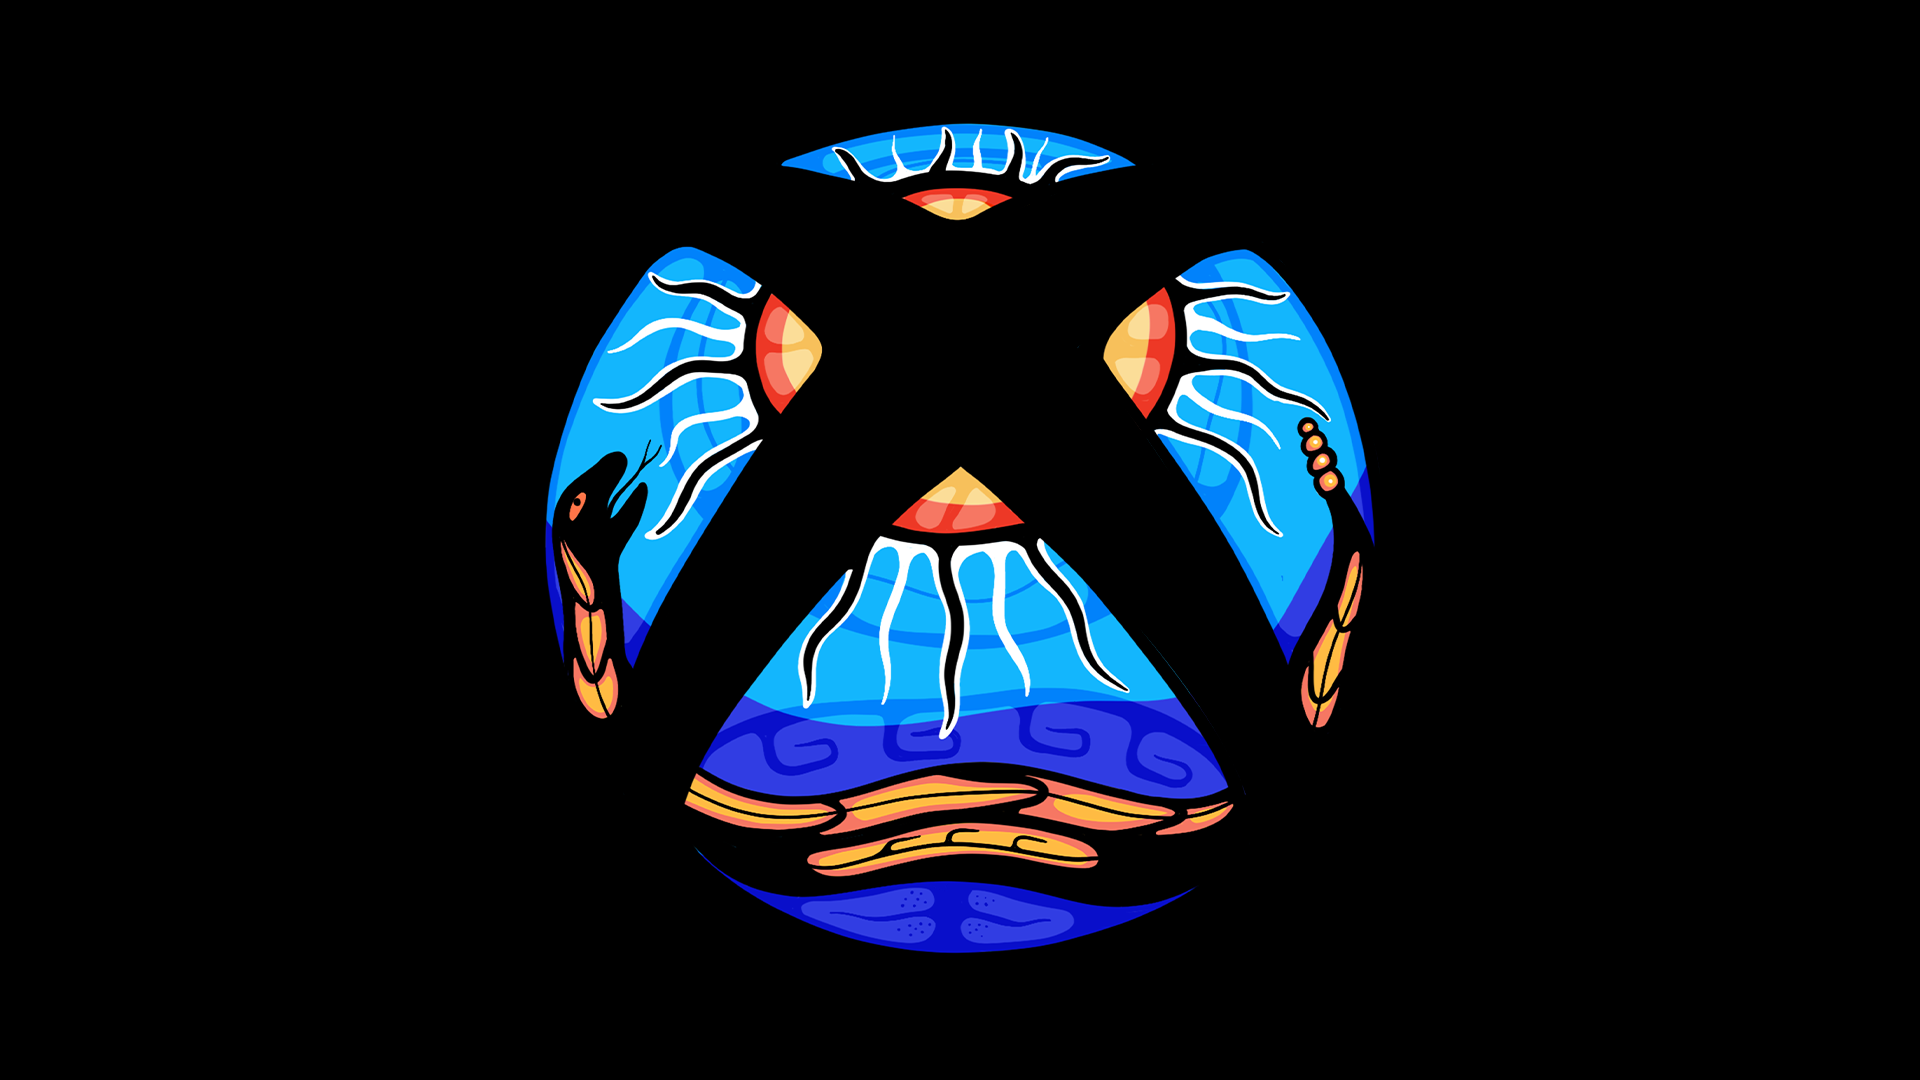 Xbox Celebrates Indigenous Peoples of the World